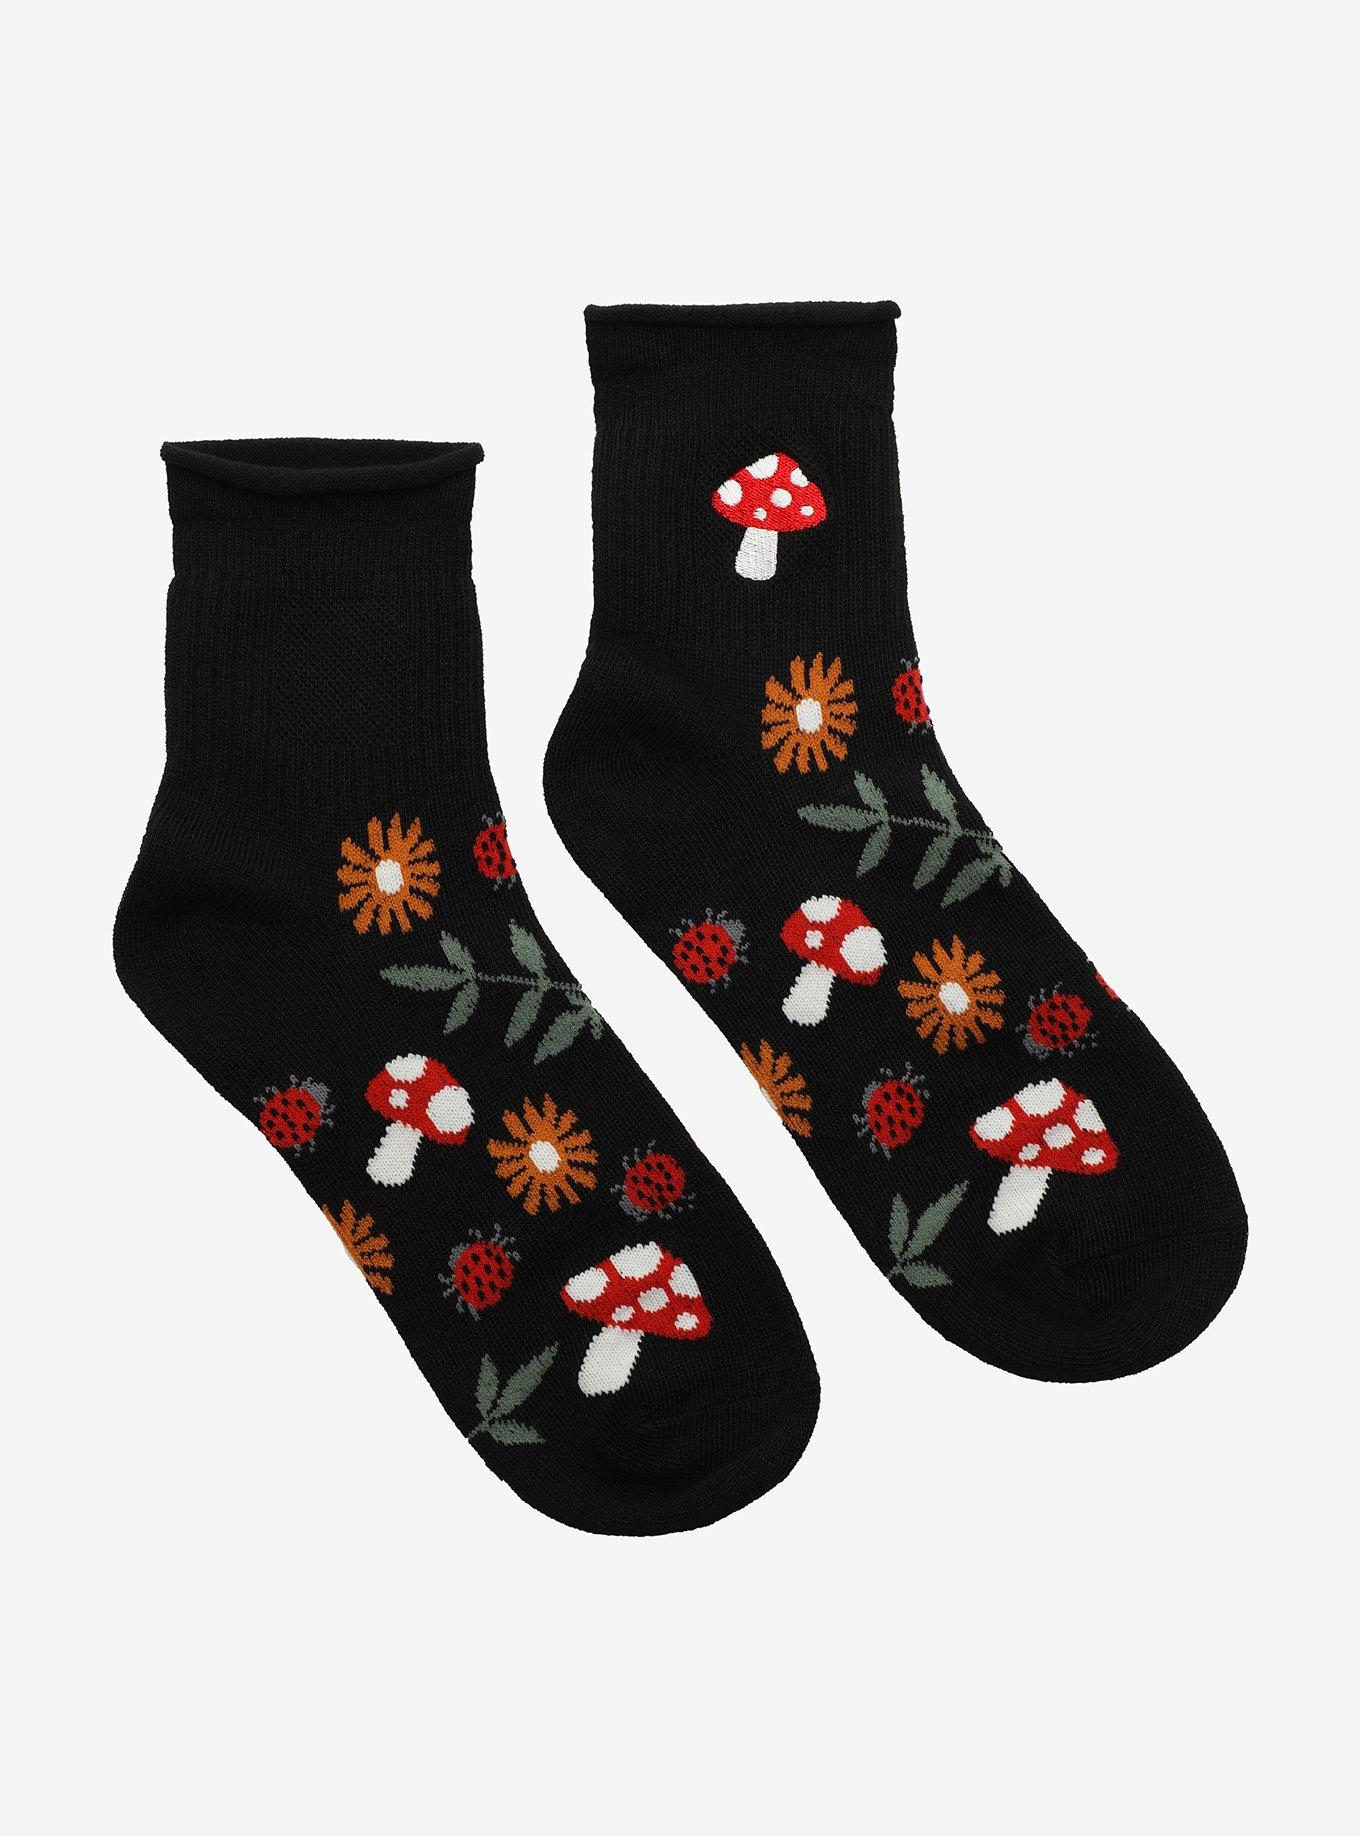 Ladybug Forest Ankle Socks | Hot Topic